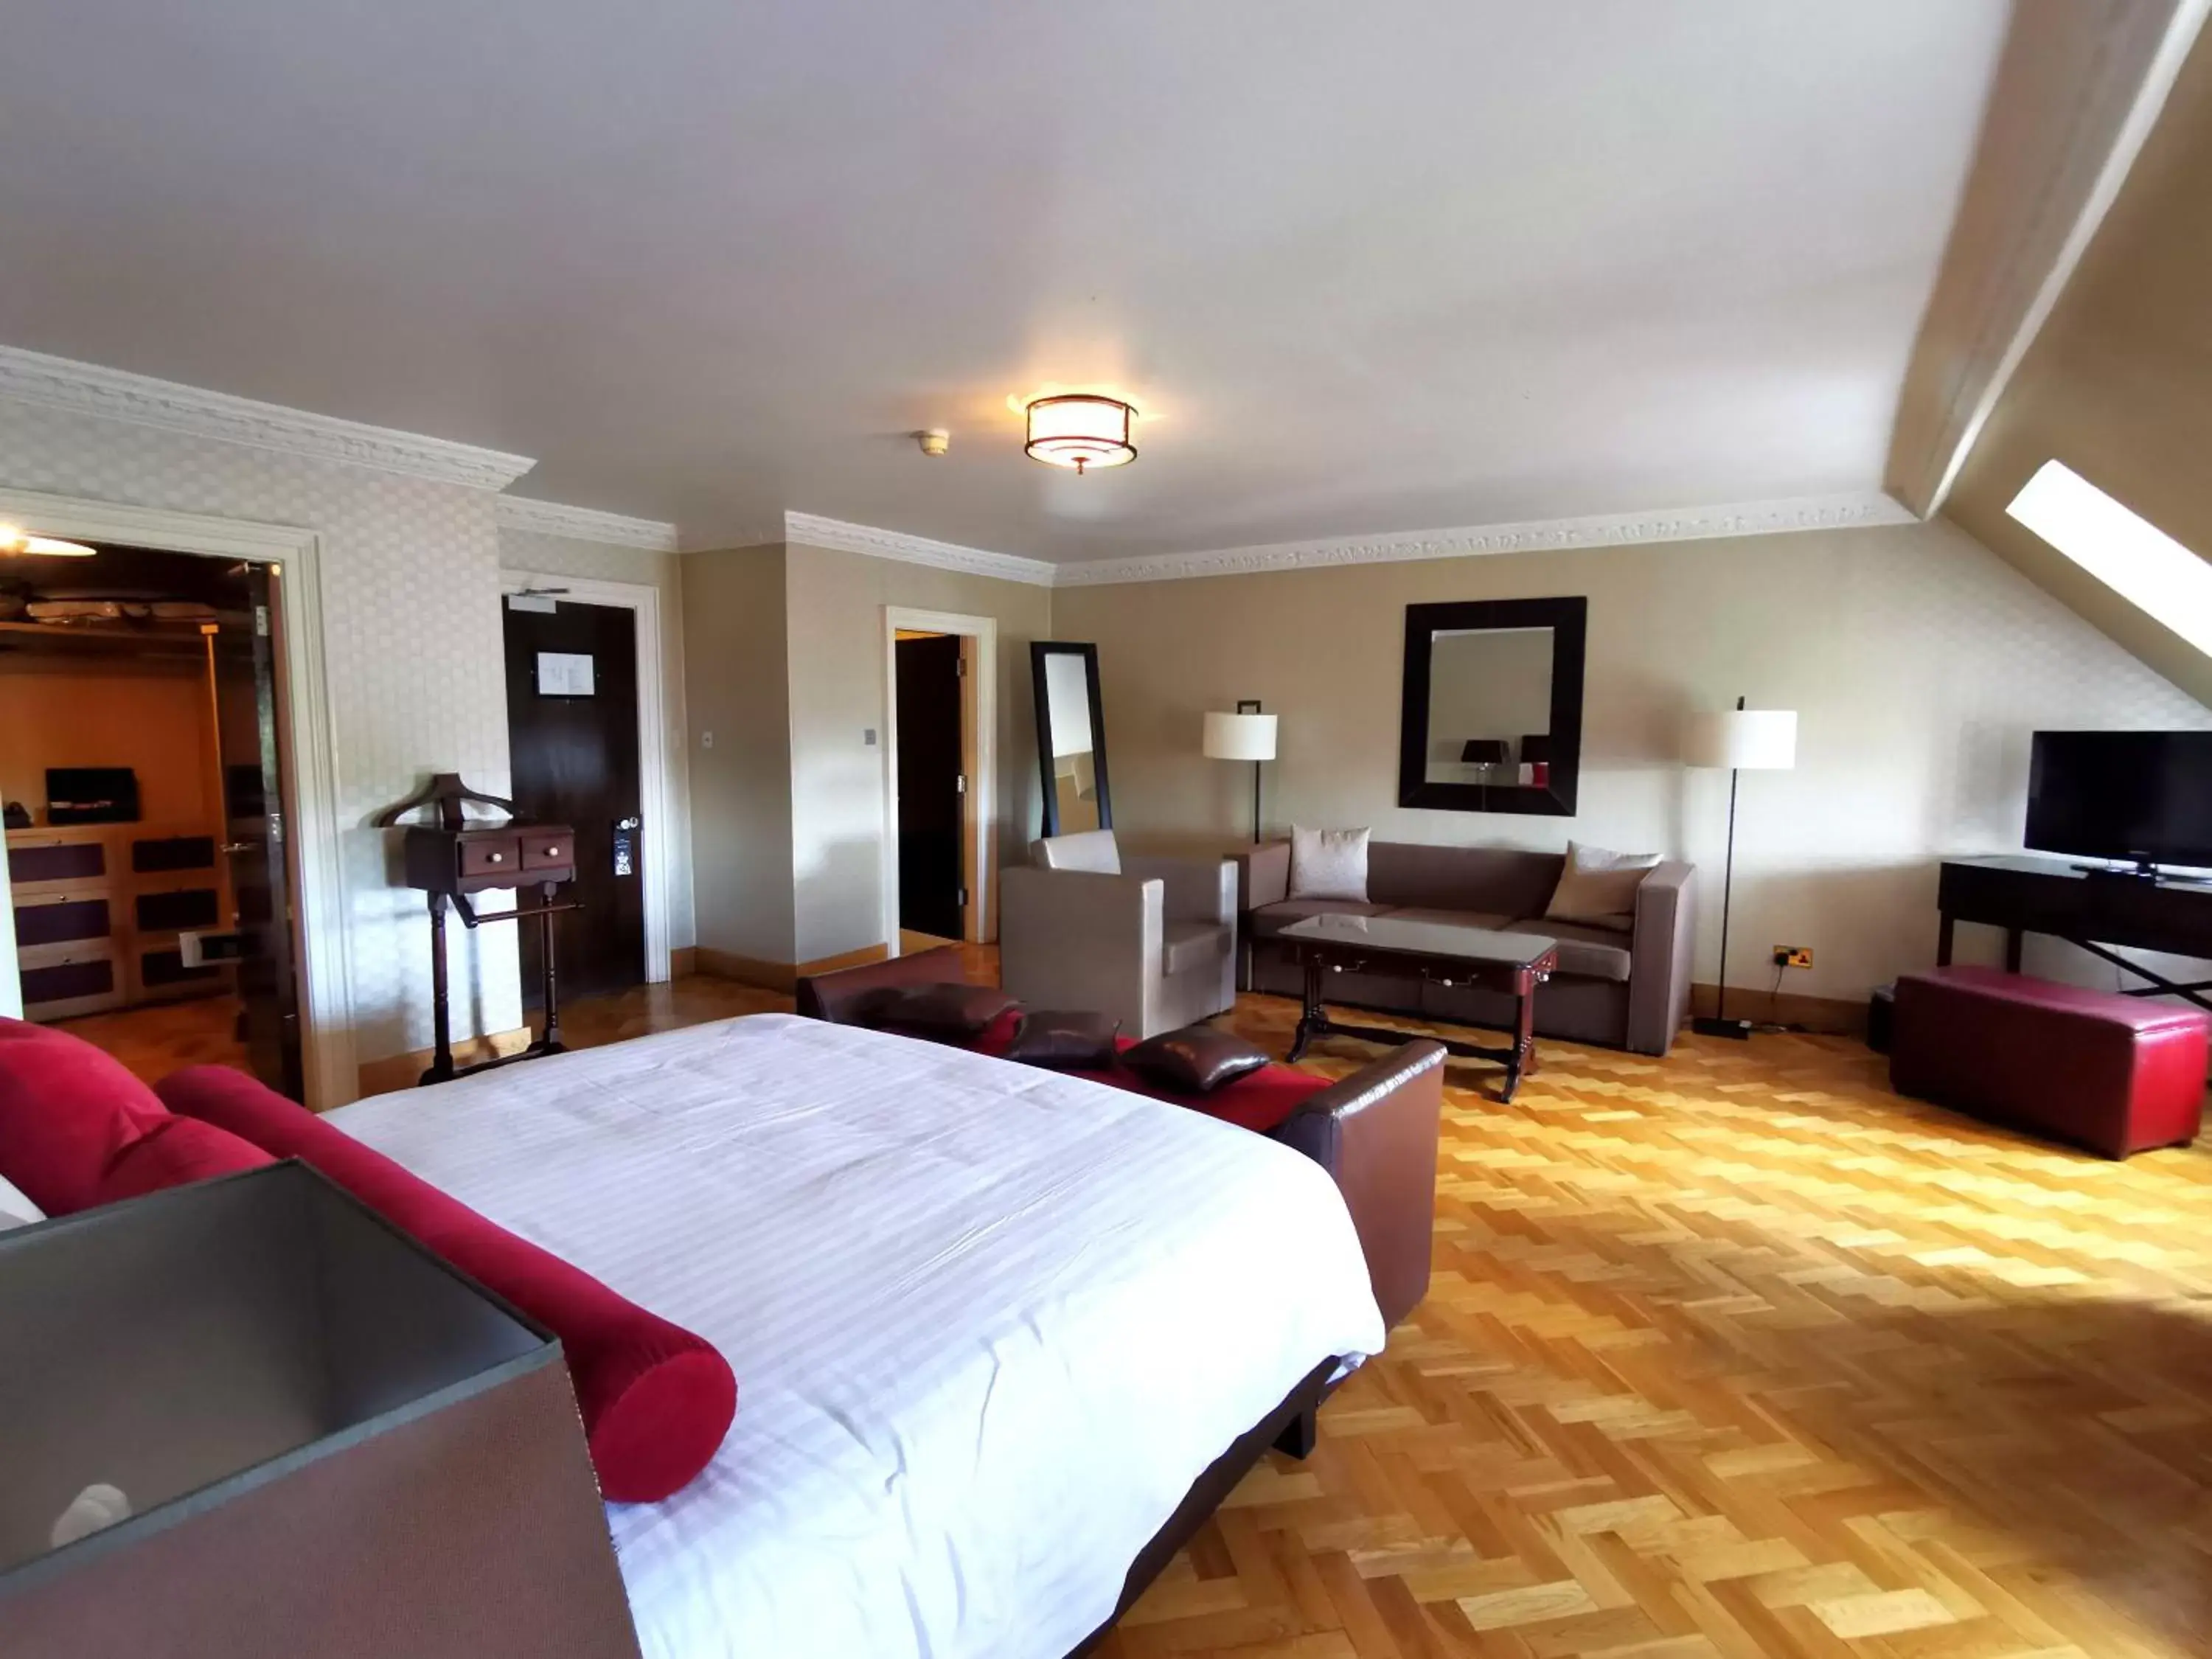 Bedroom in Langtons Hotel Kilkenny